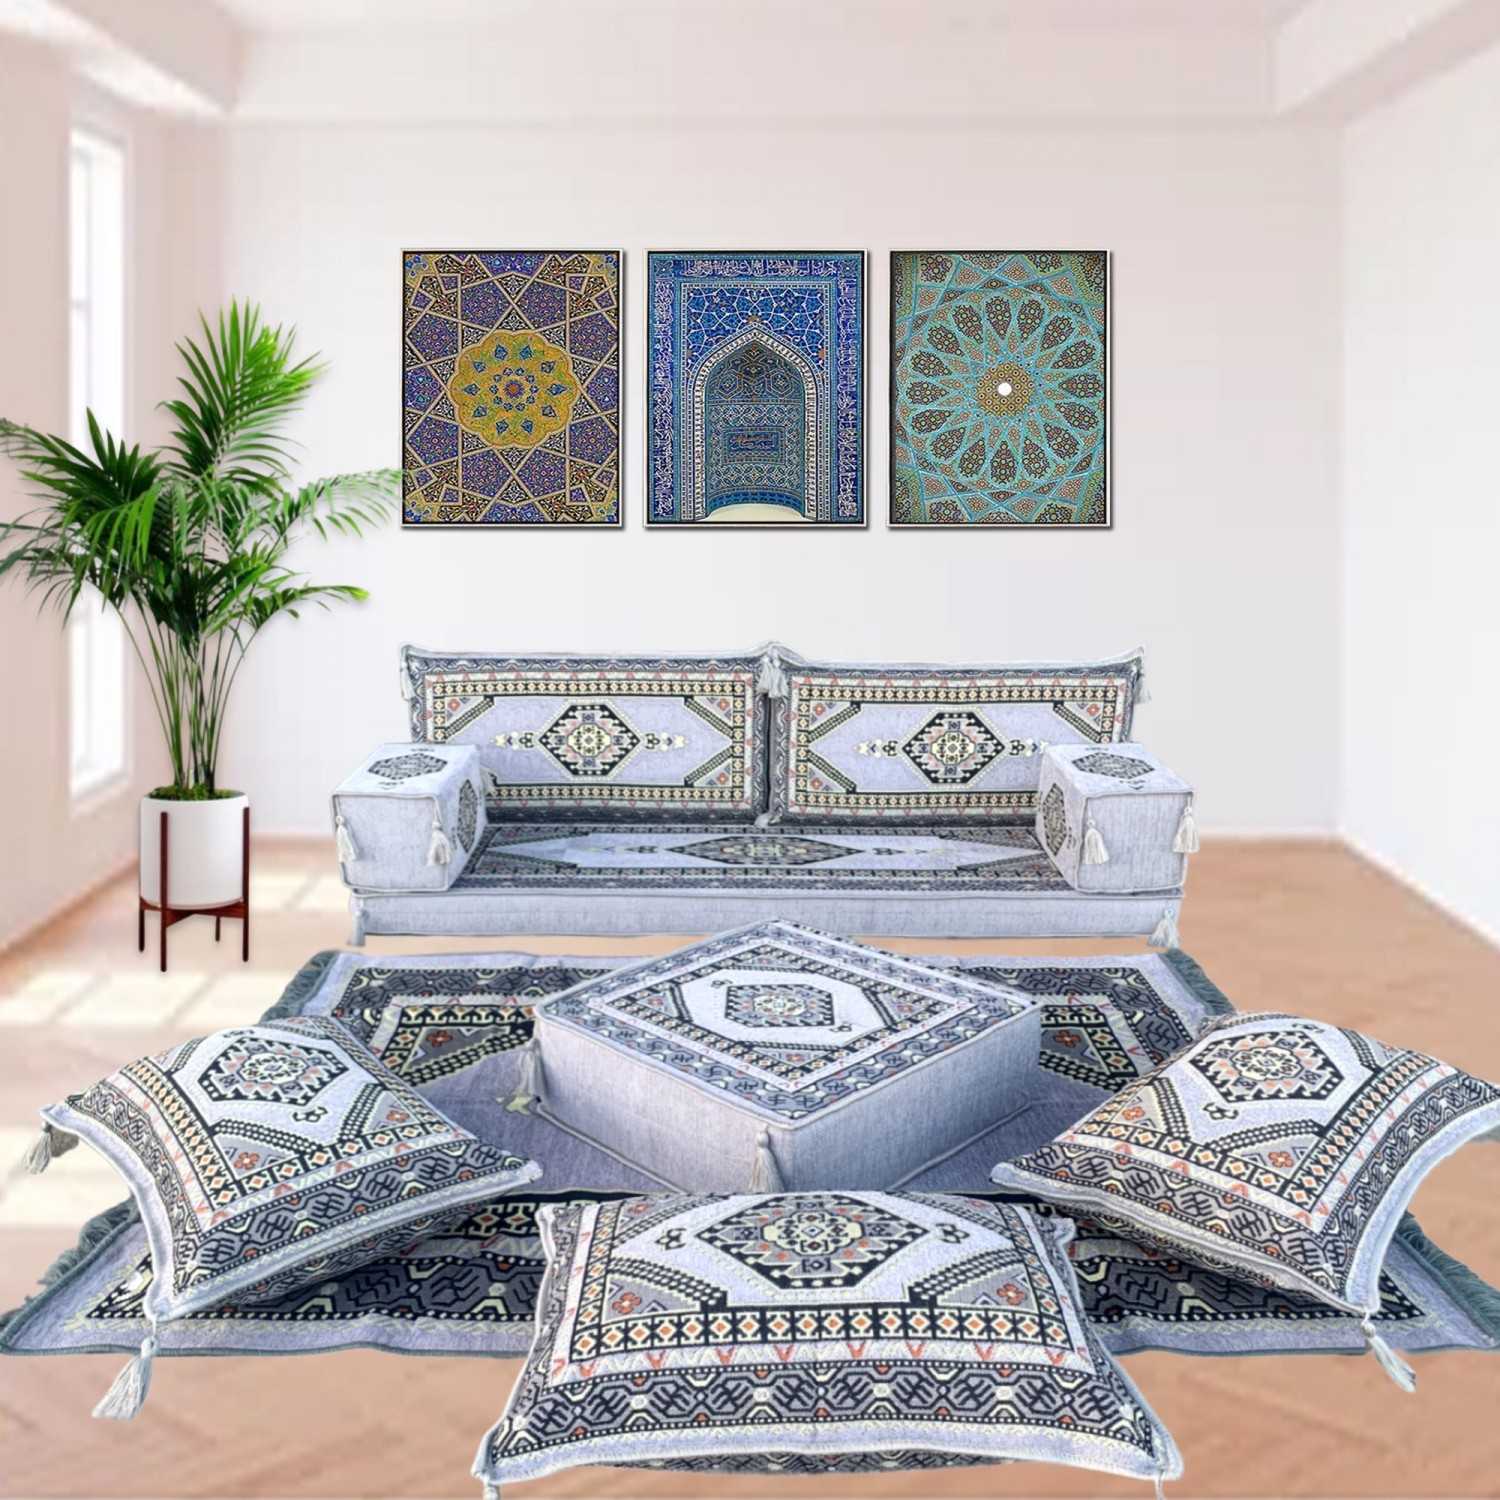 Arabic Majlis Floor Sofa For Living